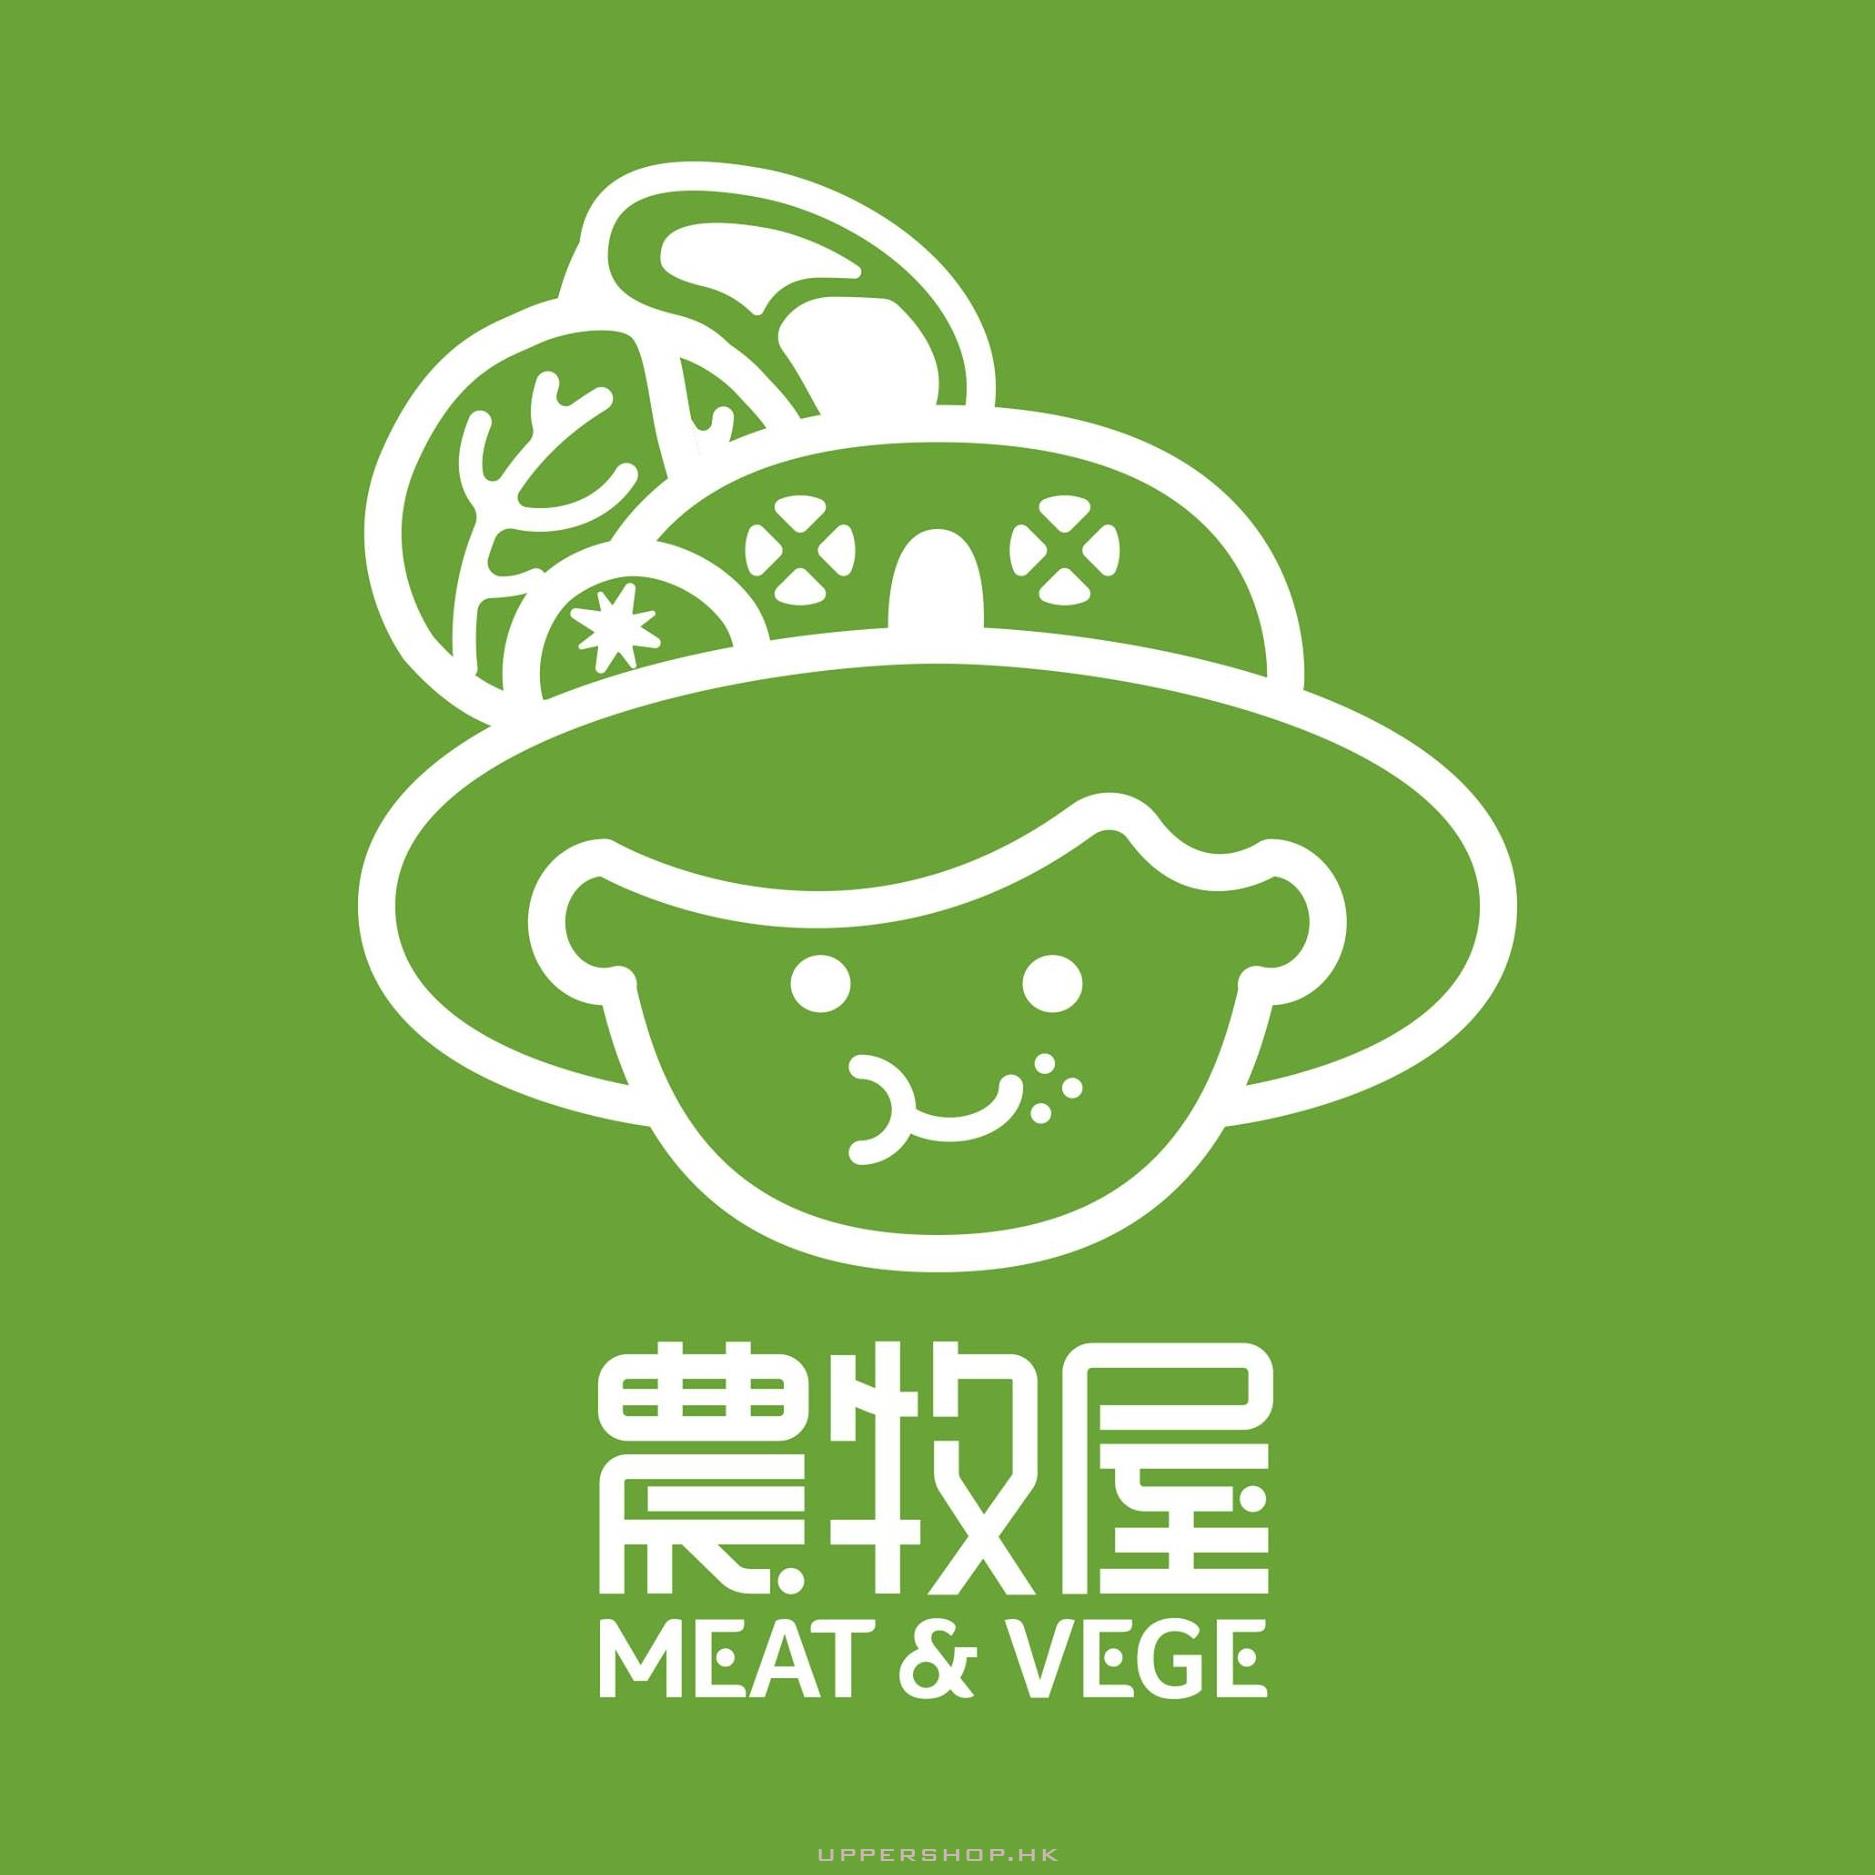 Meat & Vege 農牧屋